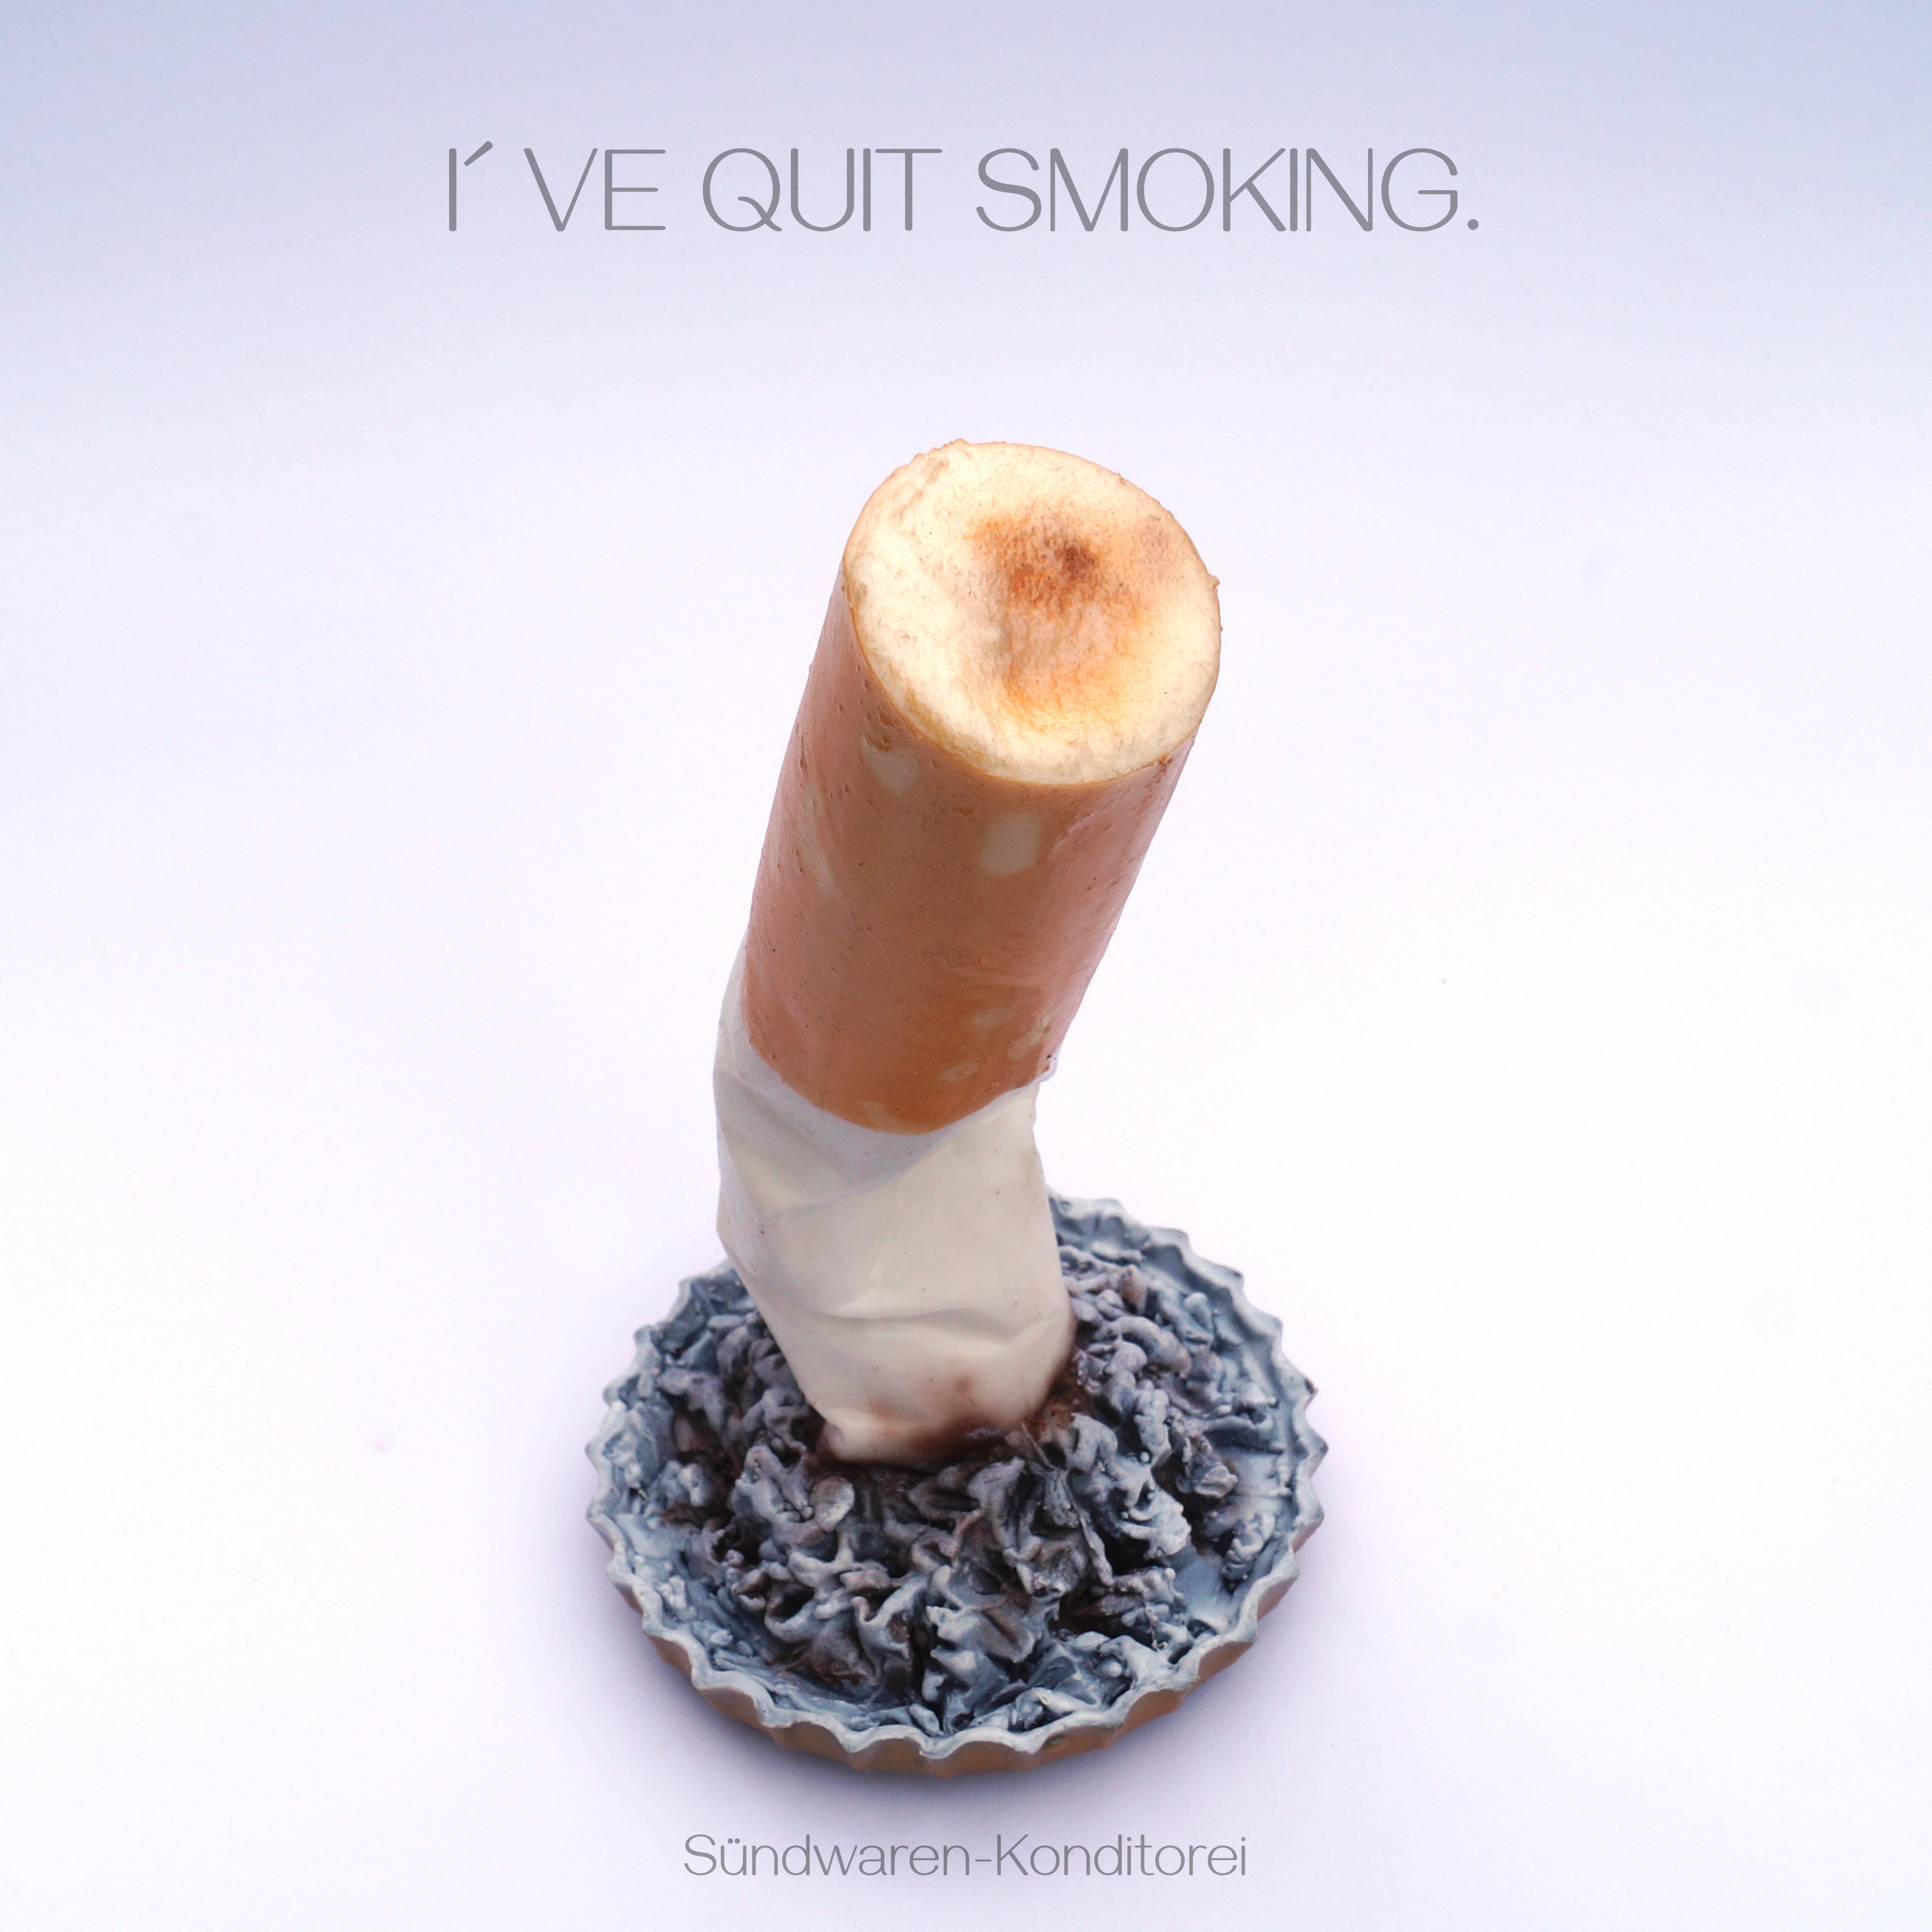 I'VE QUIT SMOKING. - Suctioncupdildo from Suendwaren-Konditorei photo